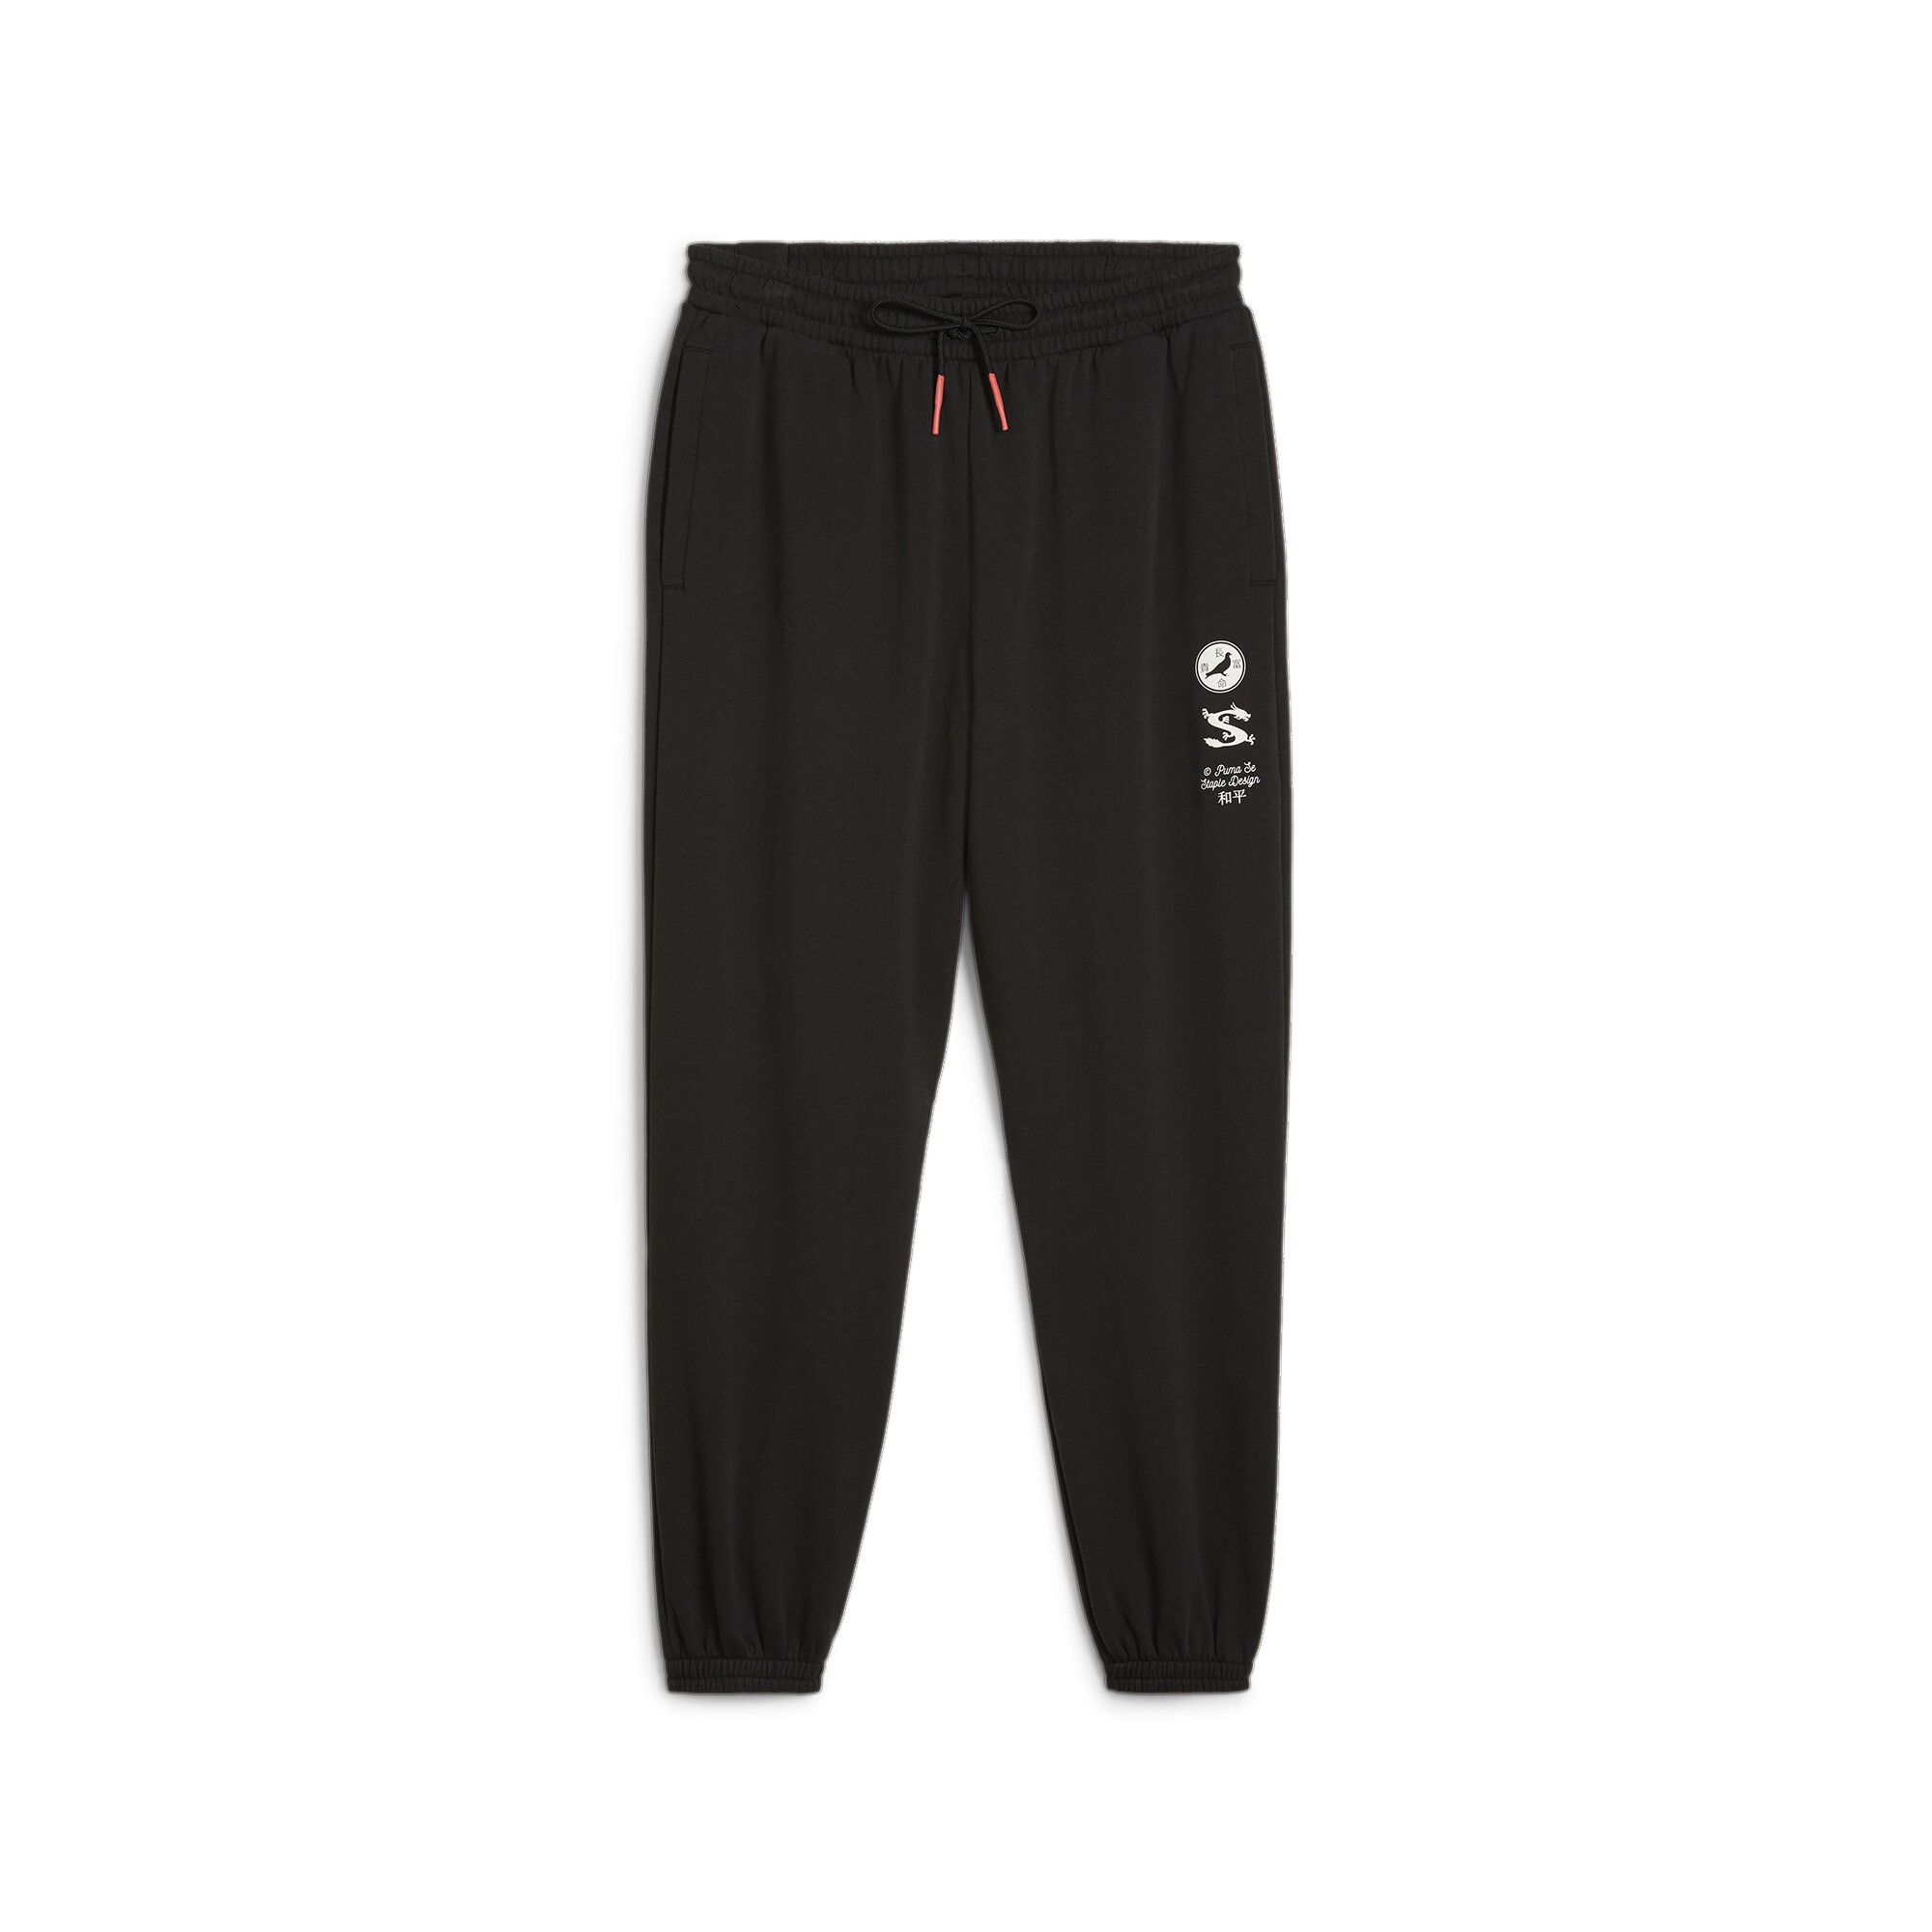 Men's Puma X STAPLE Track Pants, Black, Size M, Clothing